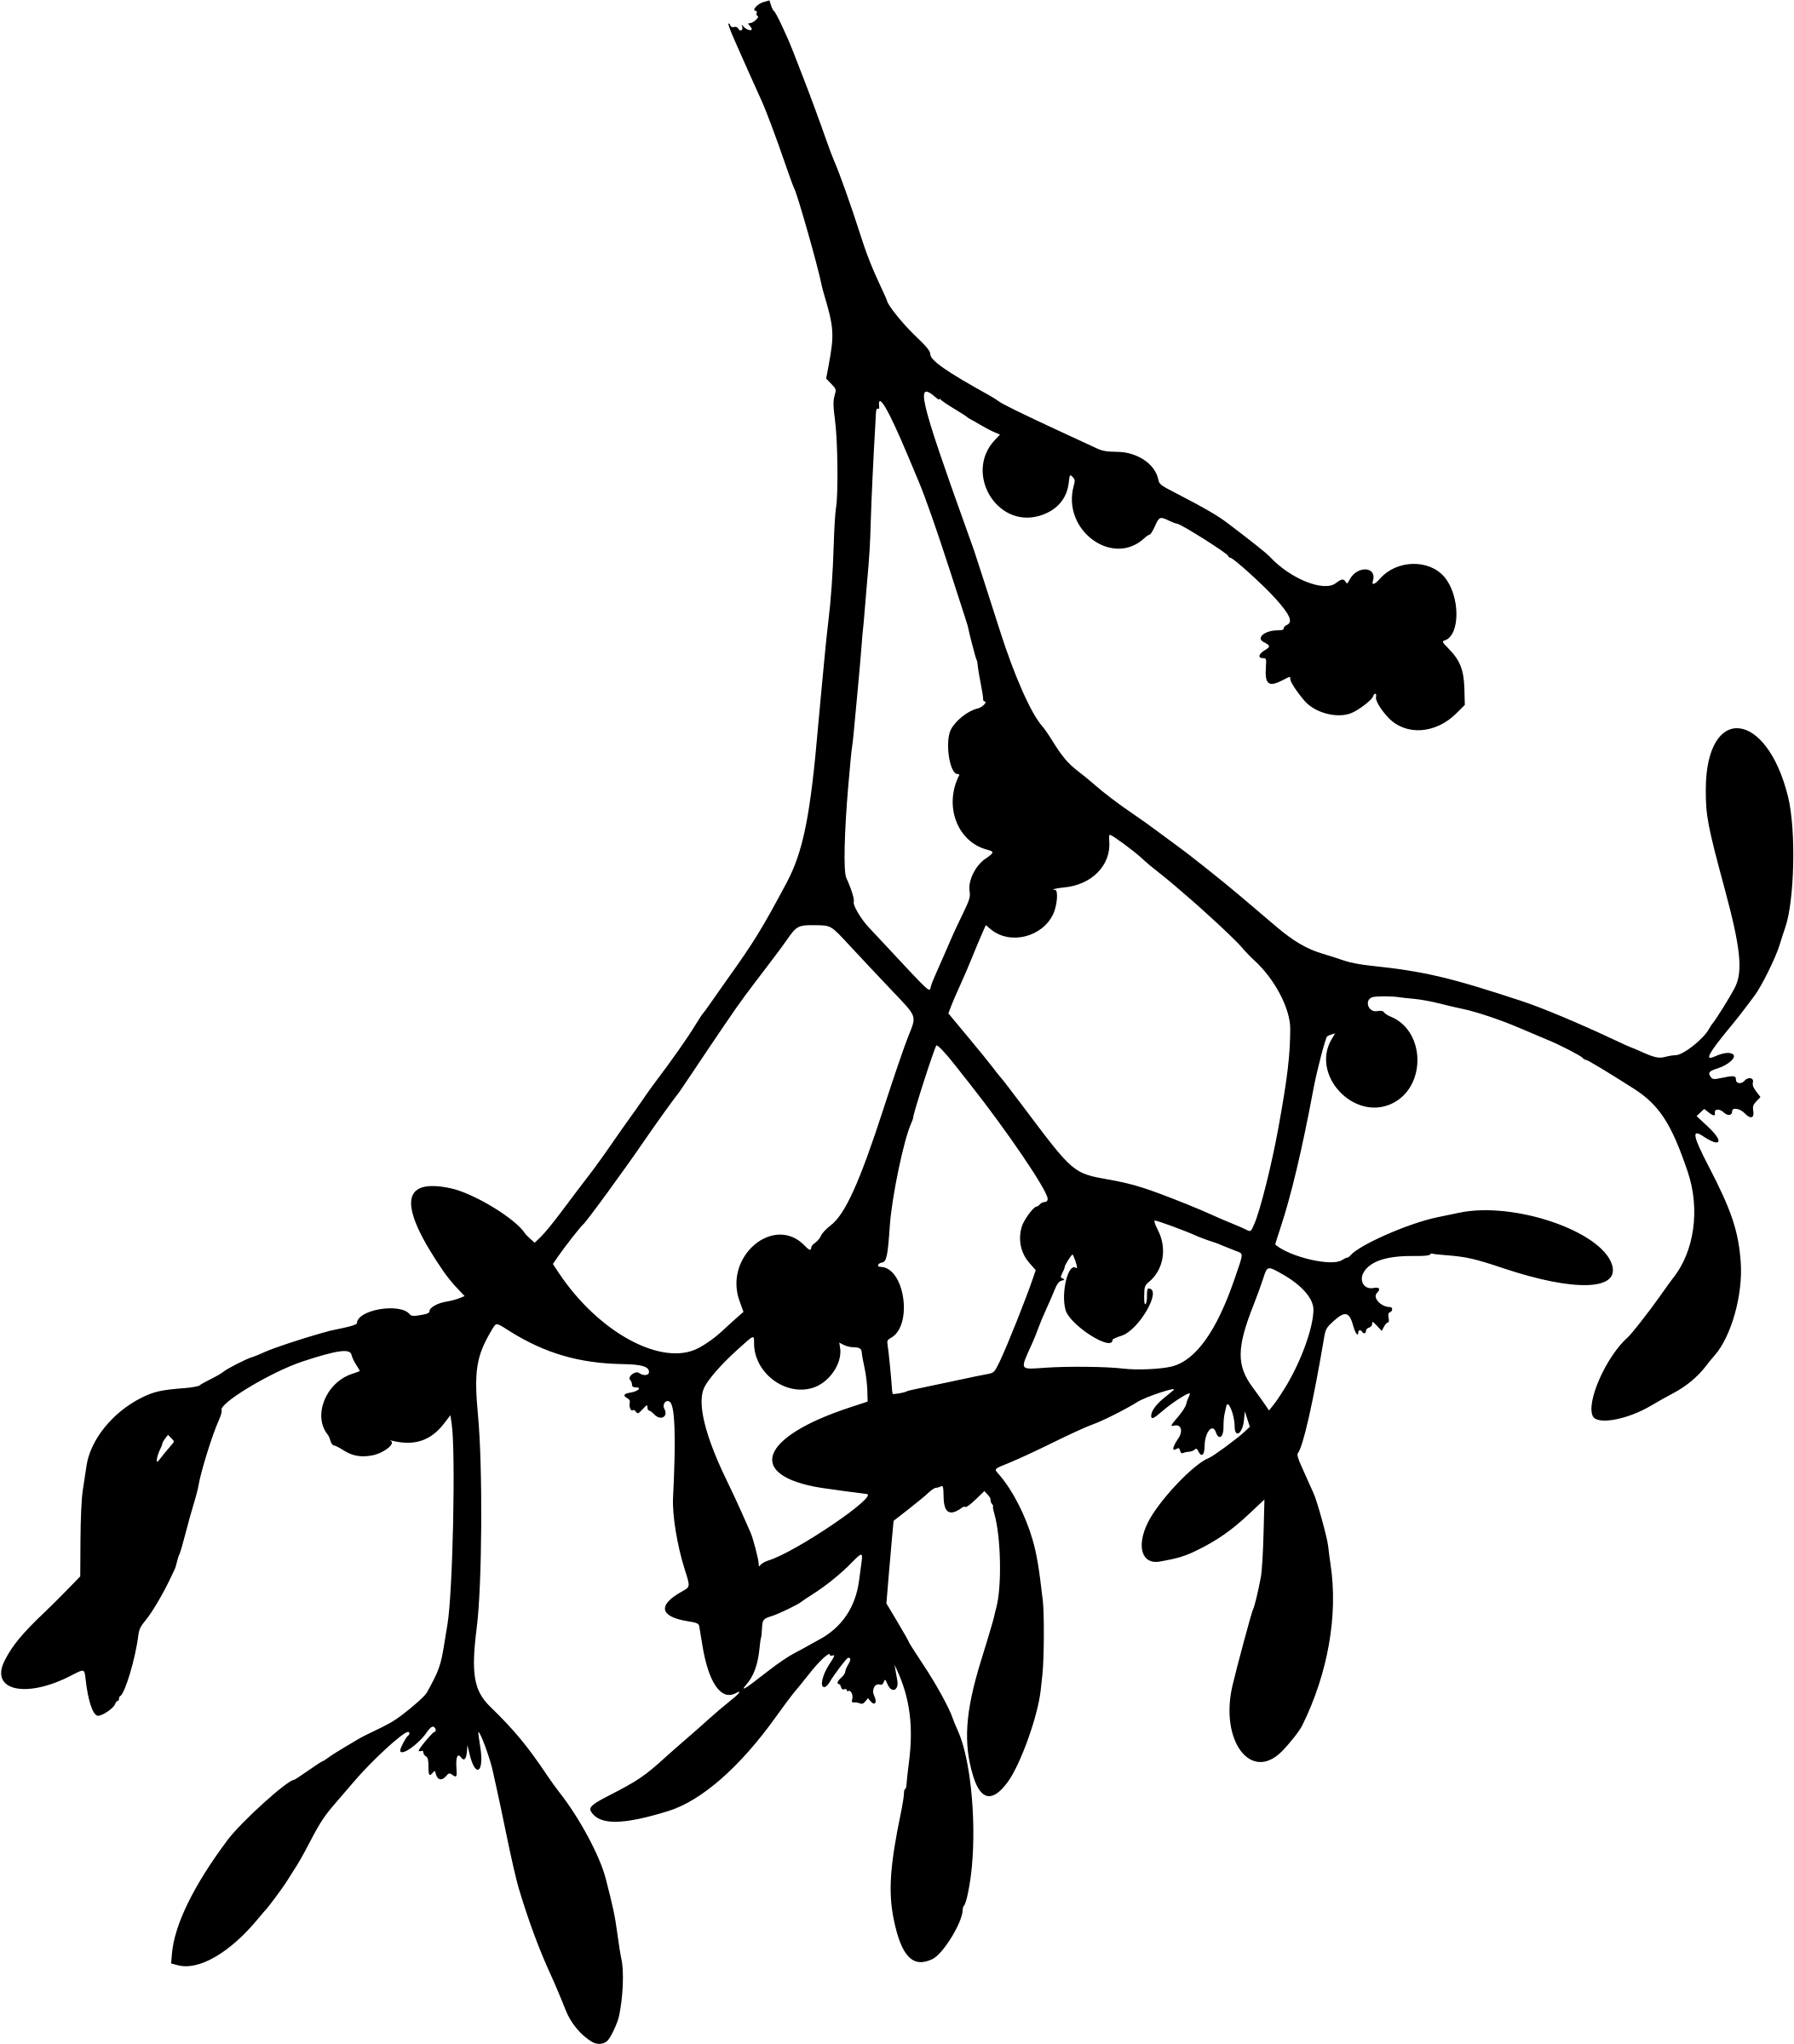 Big Image - Mistletoe Silhouette (2106x2400)